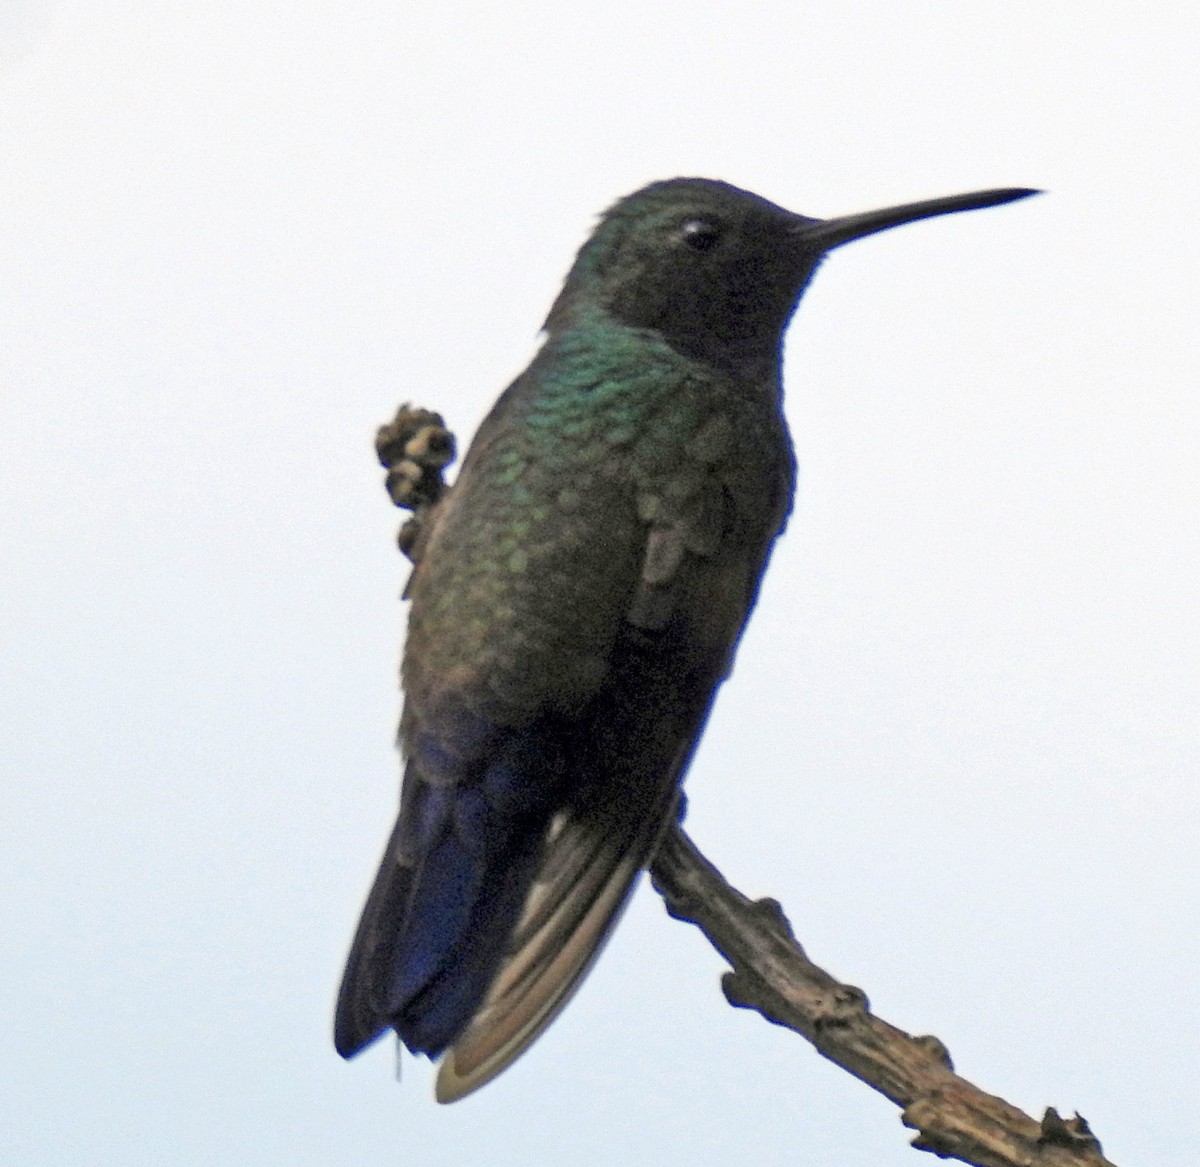 Blue-tailed Hummingbird - Danilo Moreno